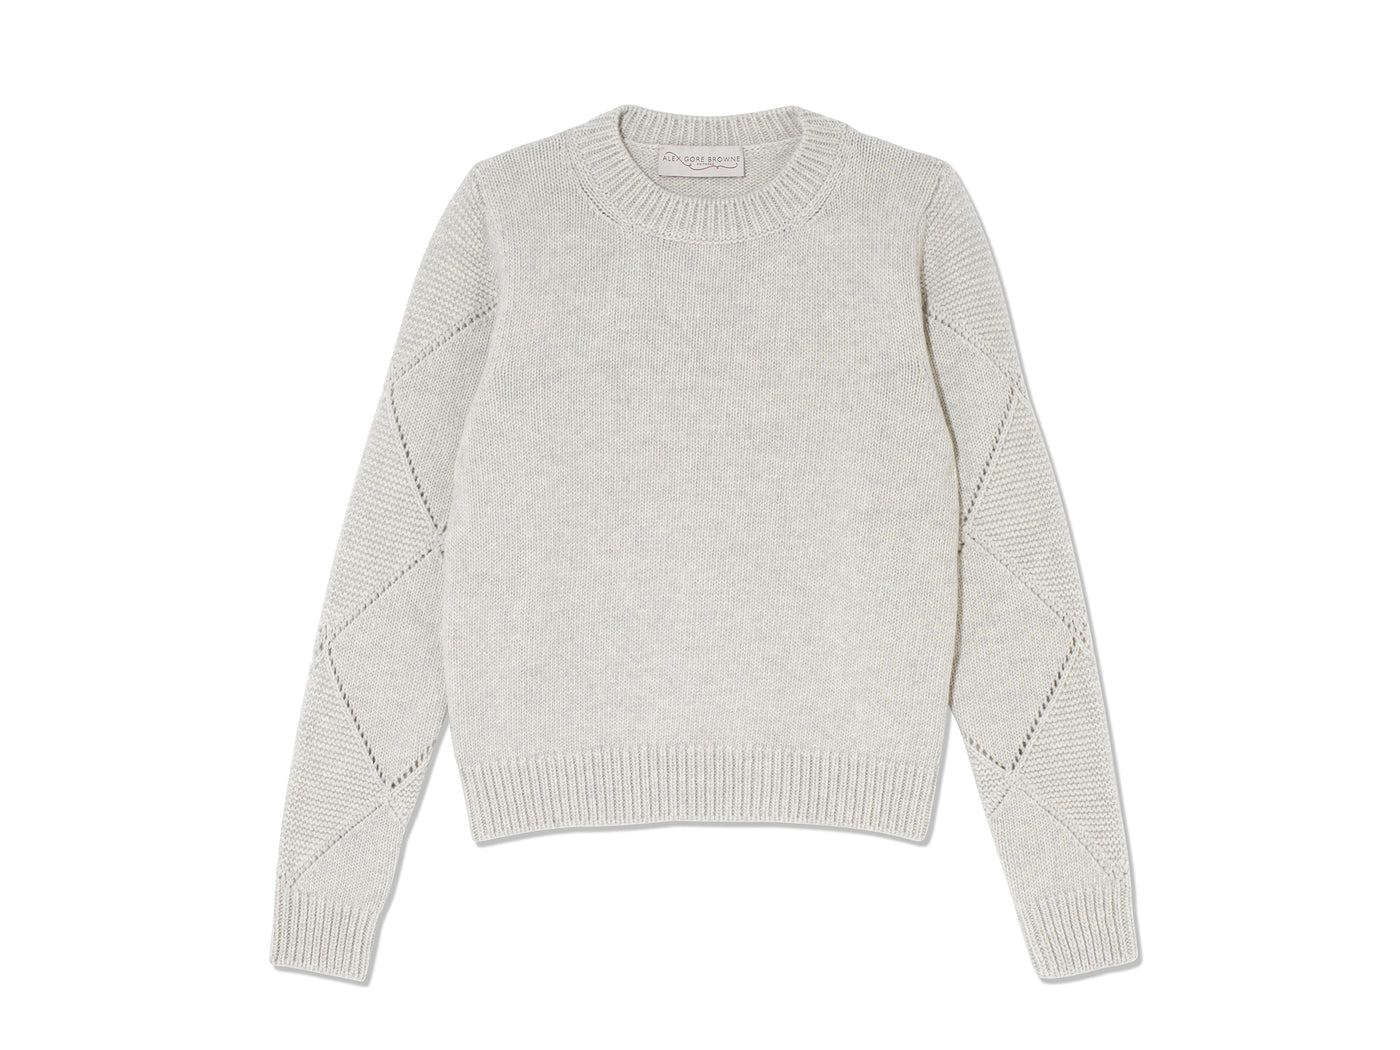 Harlequin Sweater - Silver Grey